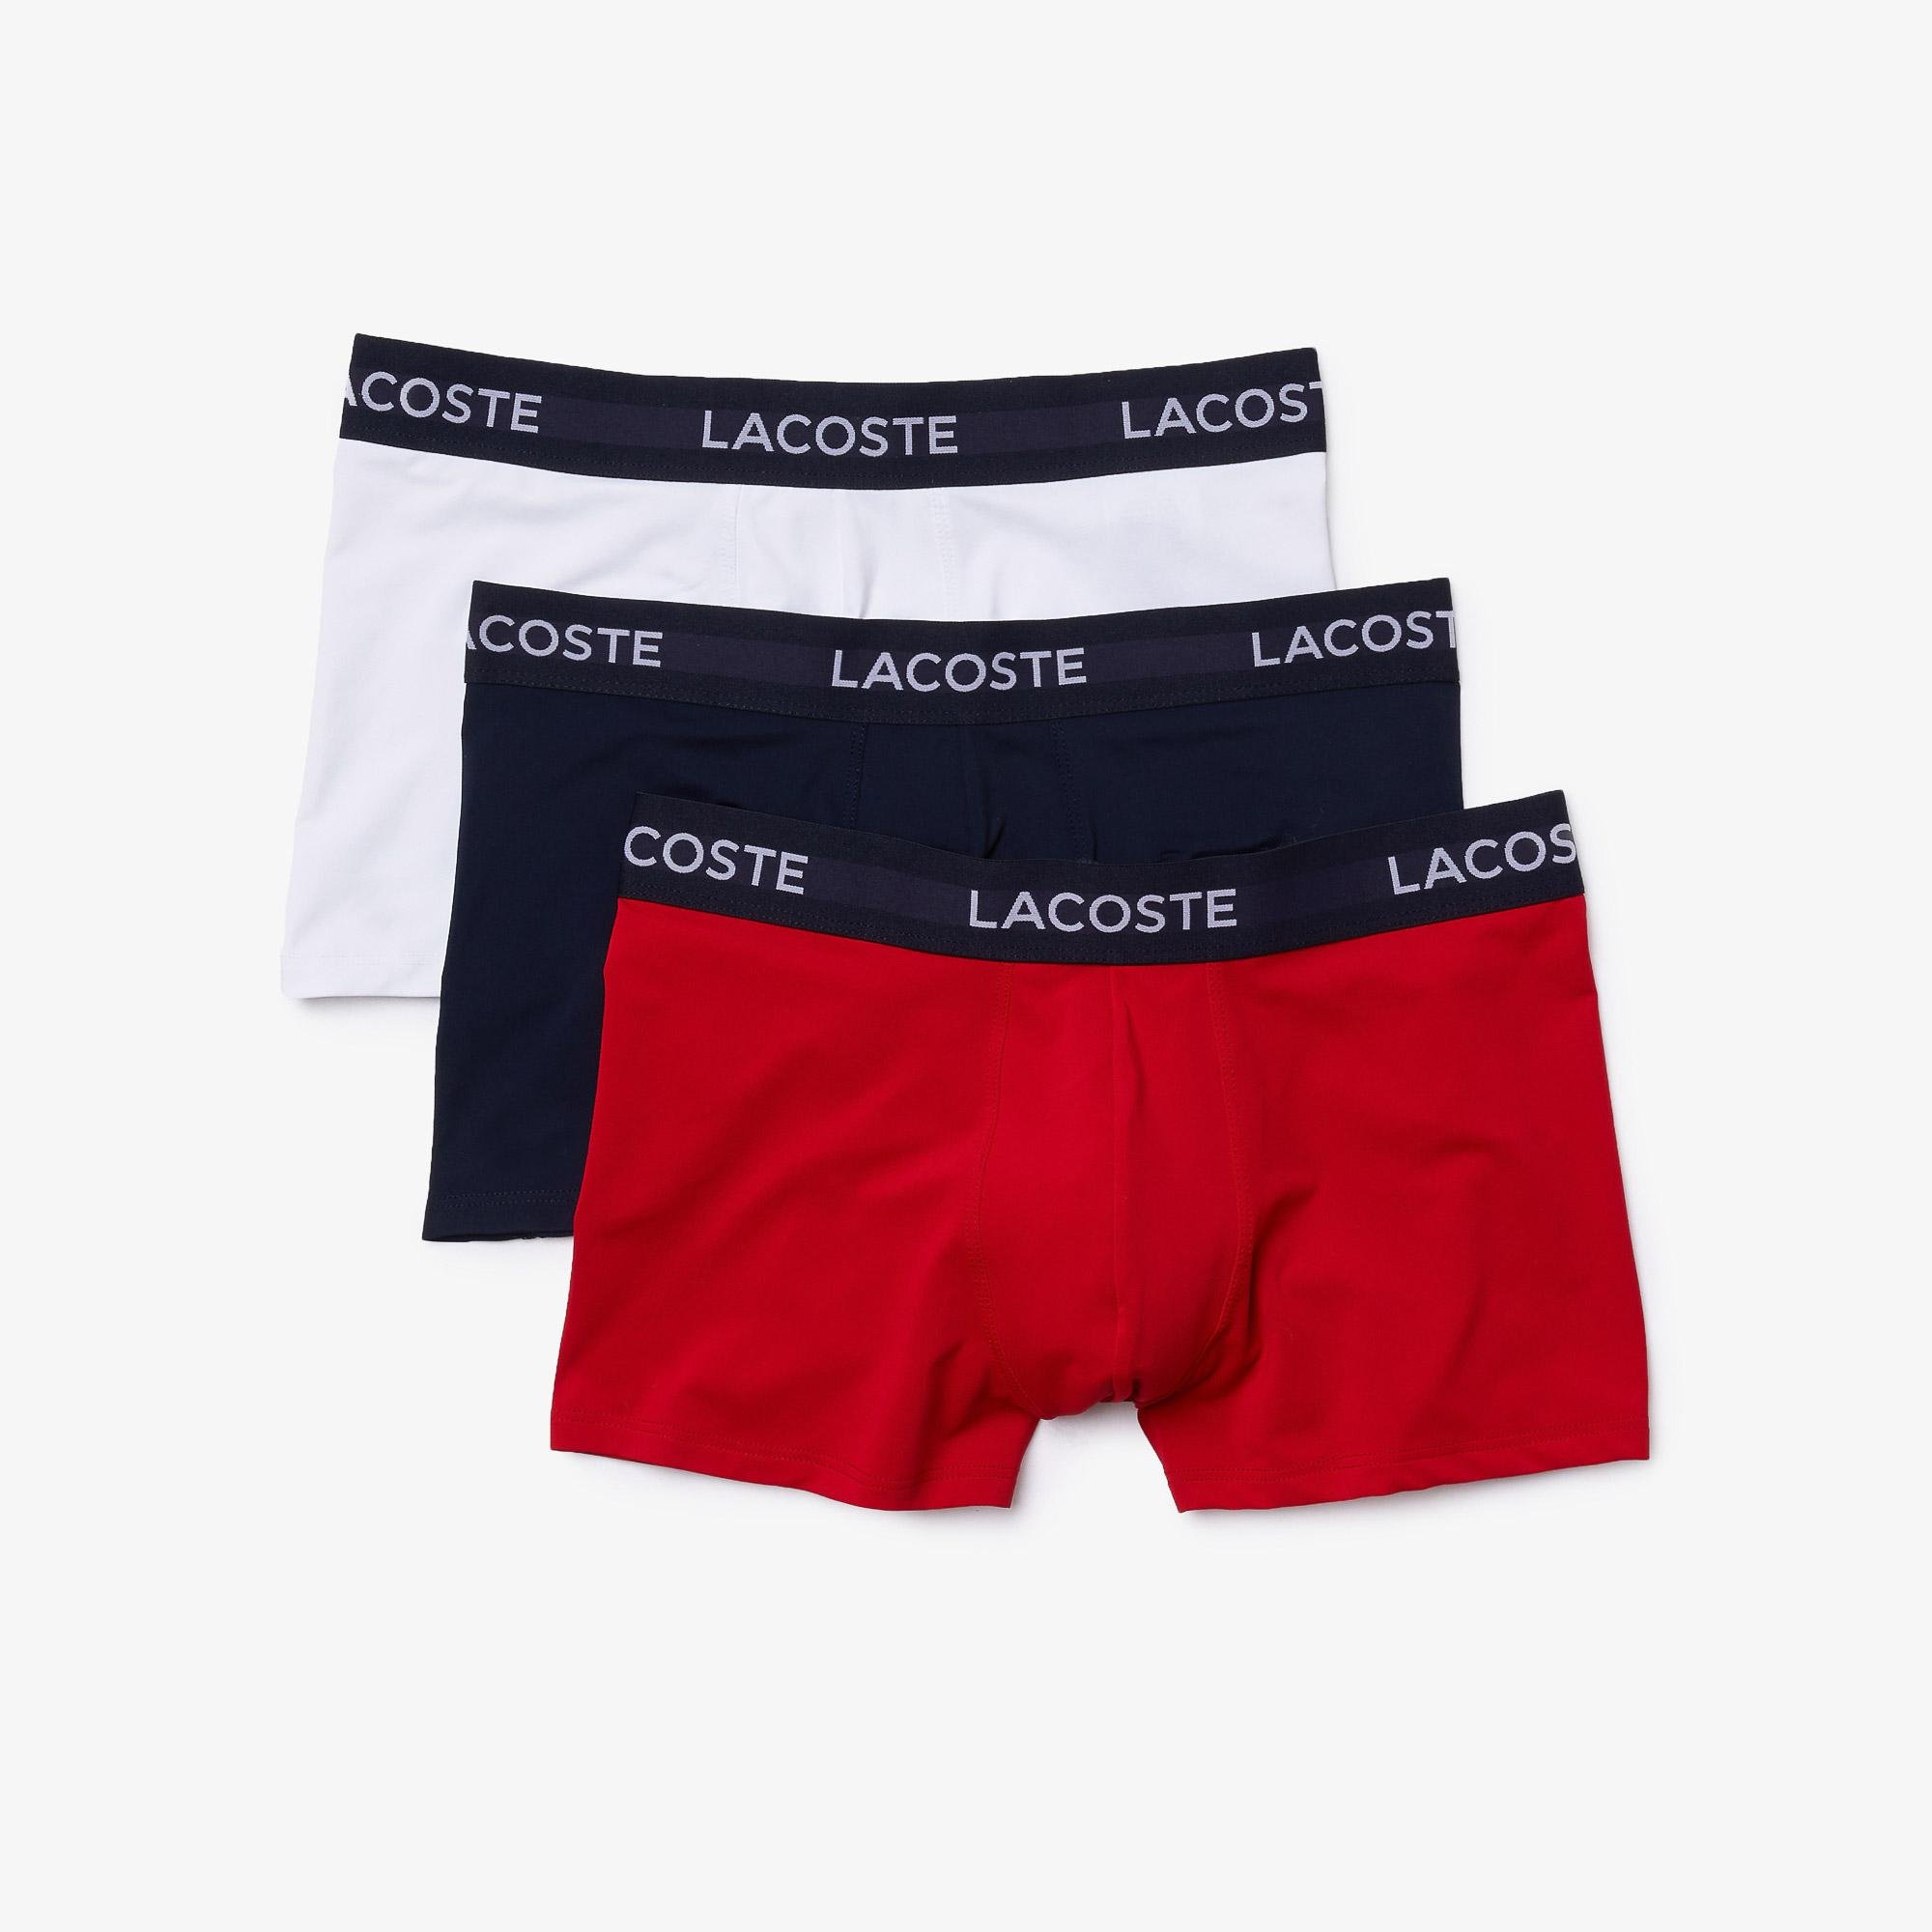 Lacoste Men’s Stretch Cotton Trunk 3-Pack